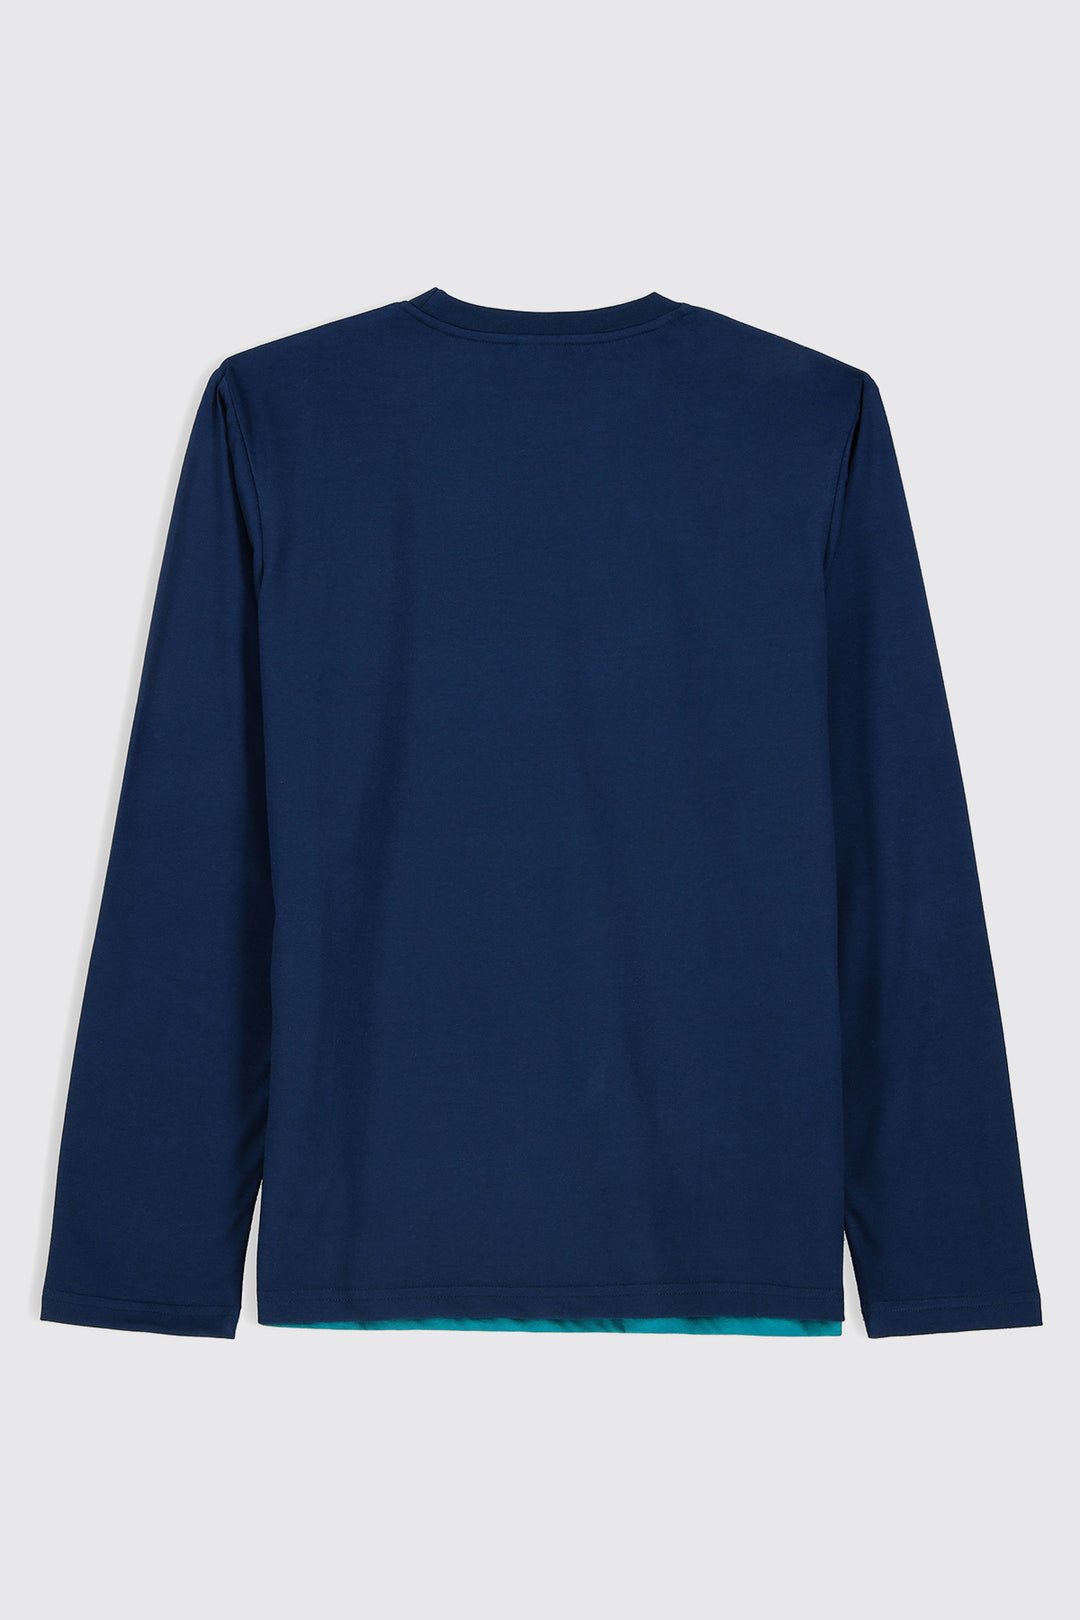 Aqua Green & Blue Paneled Embroidered T-Shirt - W23 - MT0278R